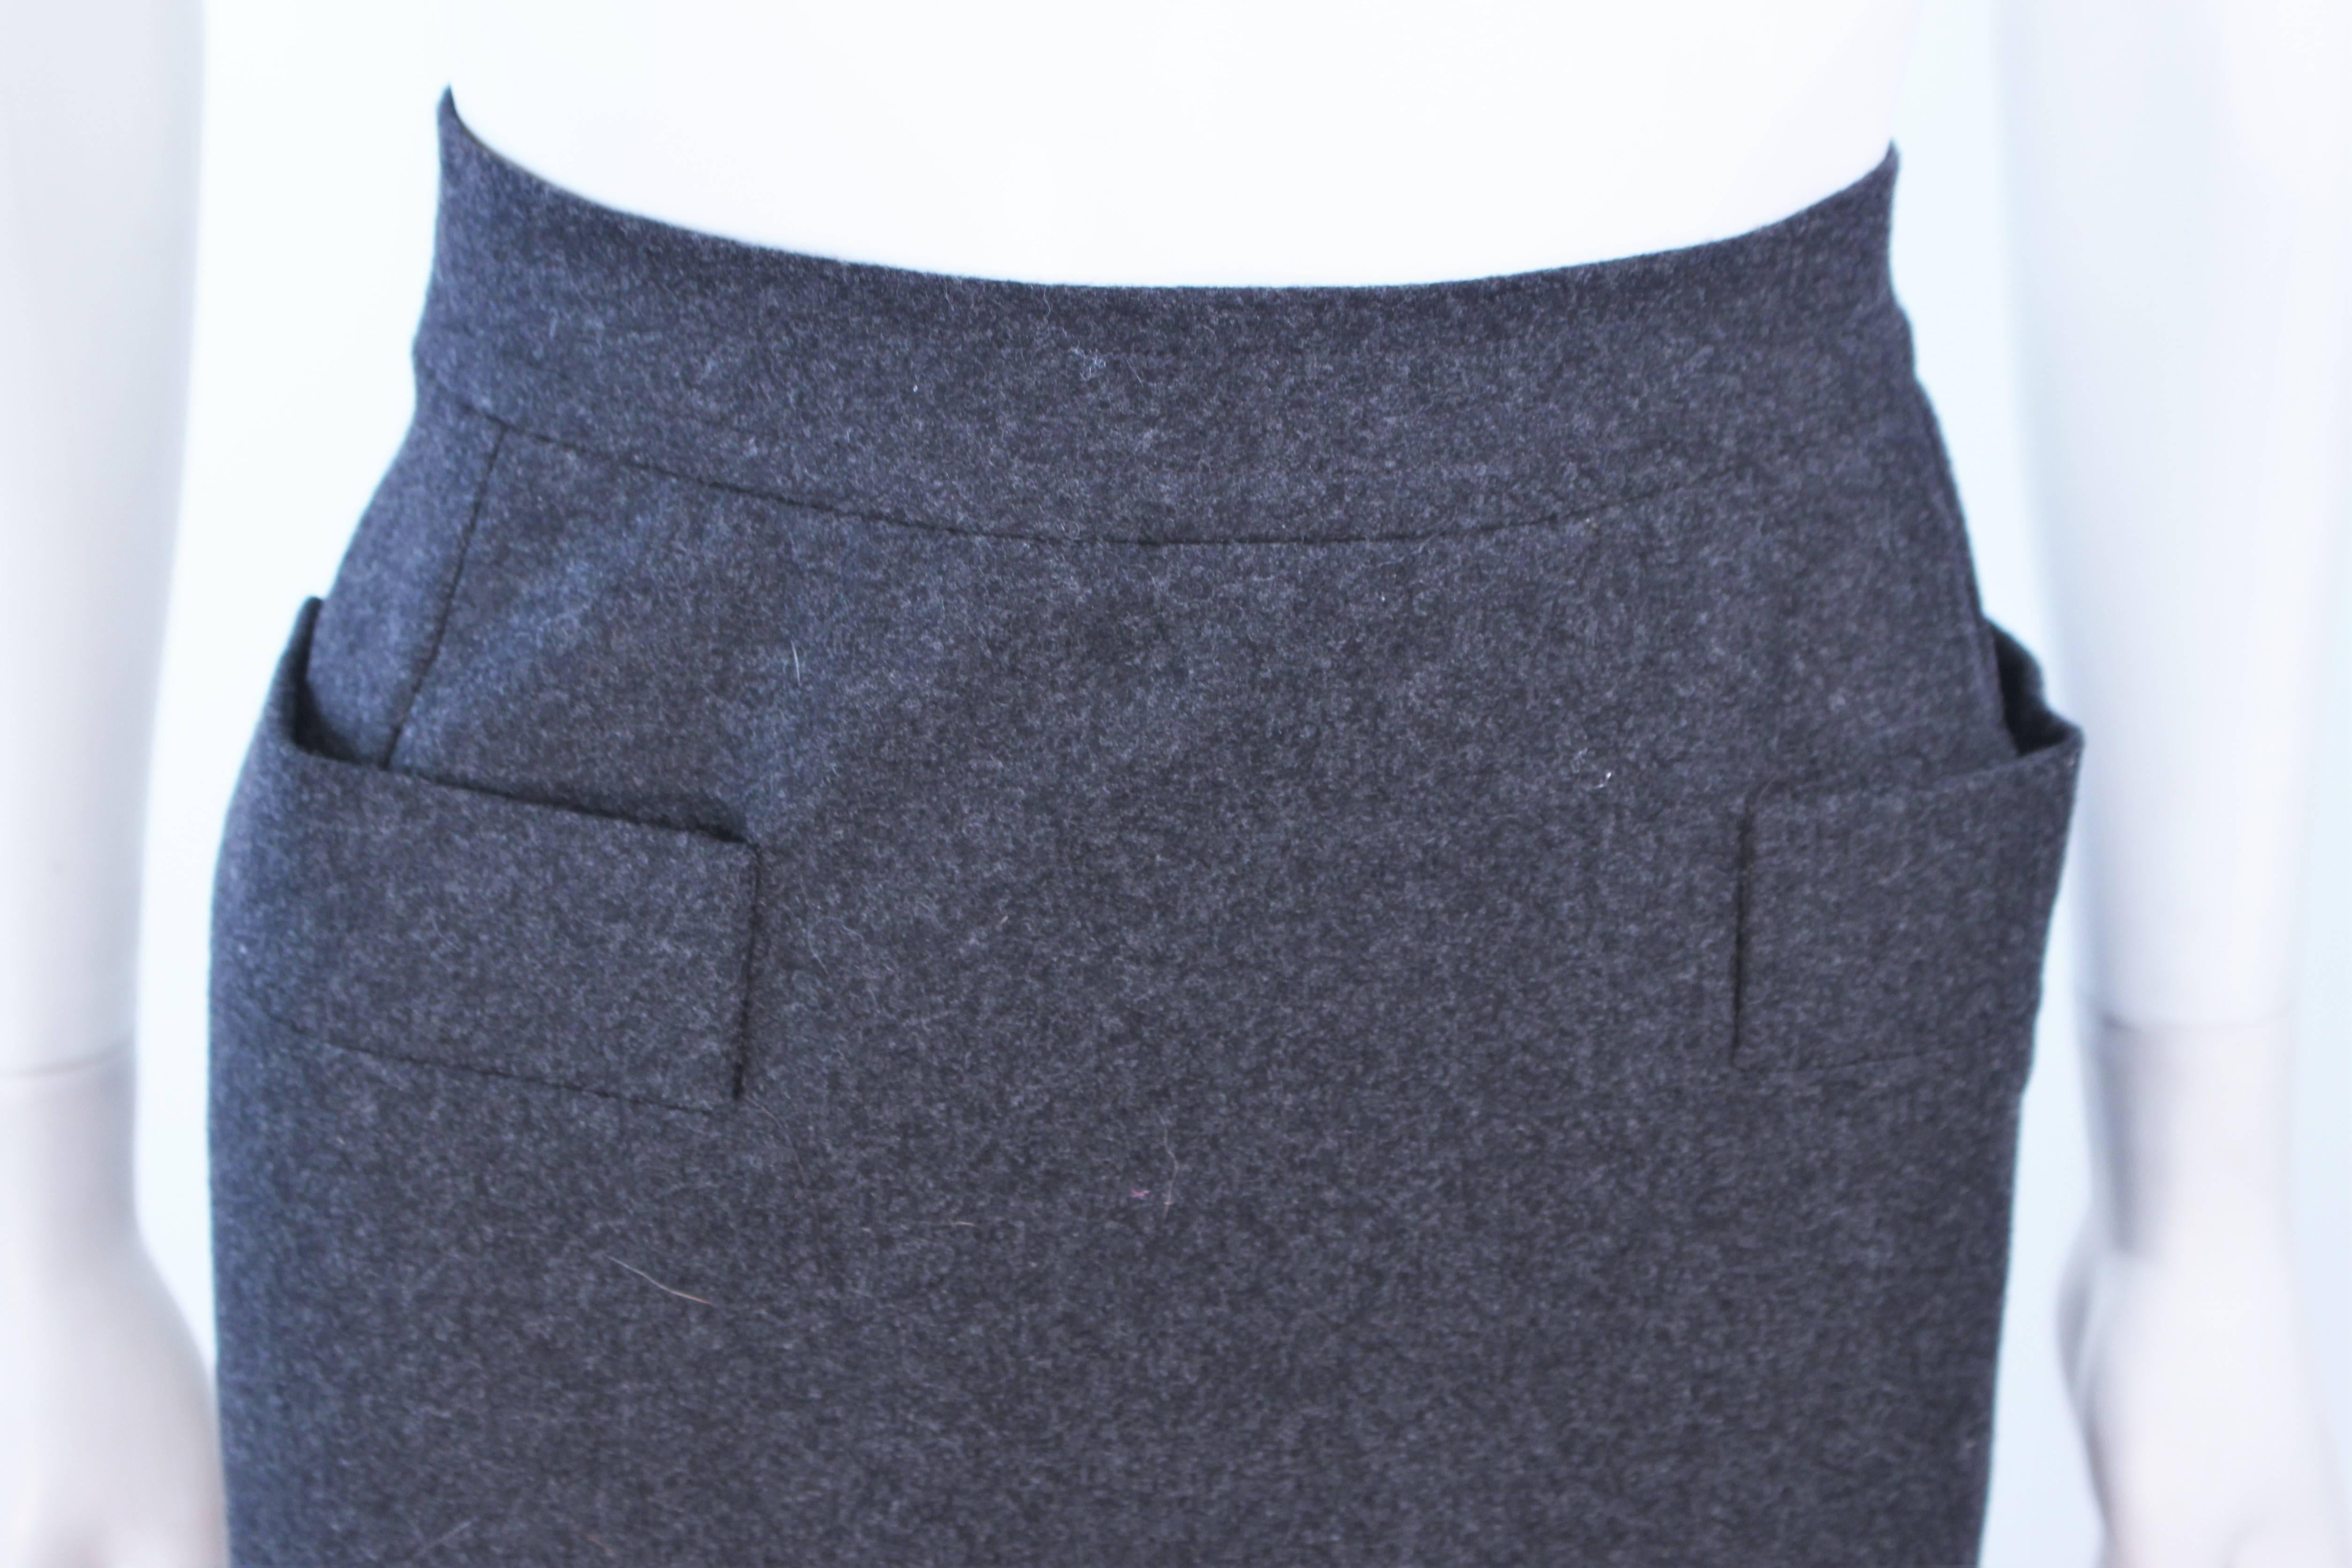 Black YVES SAINT LAURENT Charcoal Wool Pencil Skirt Size 46 